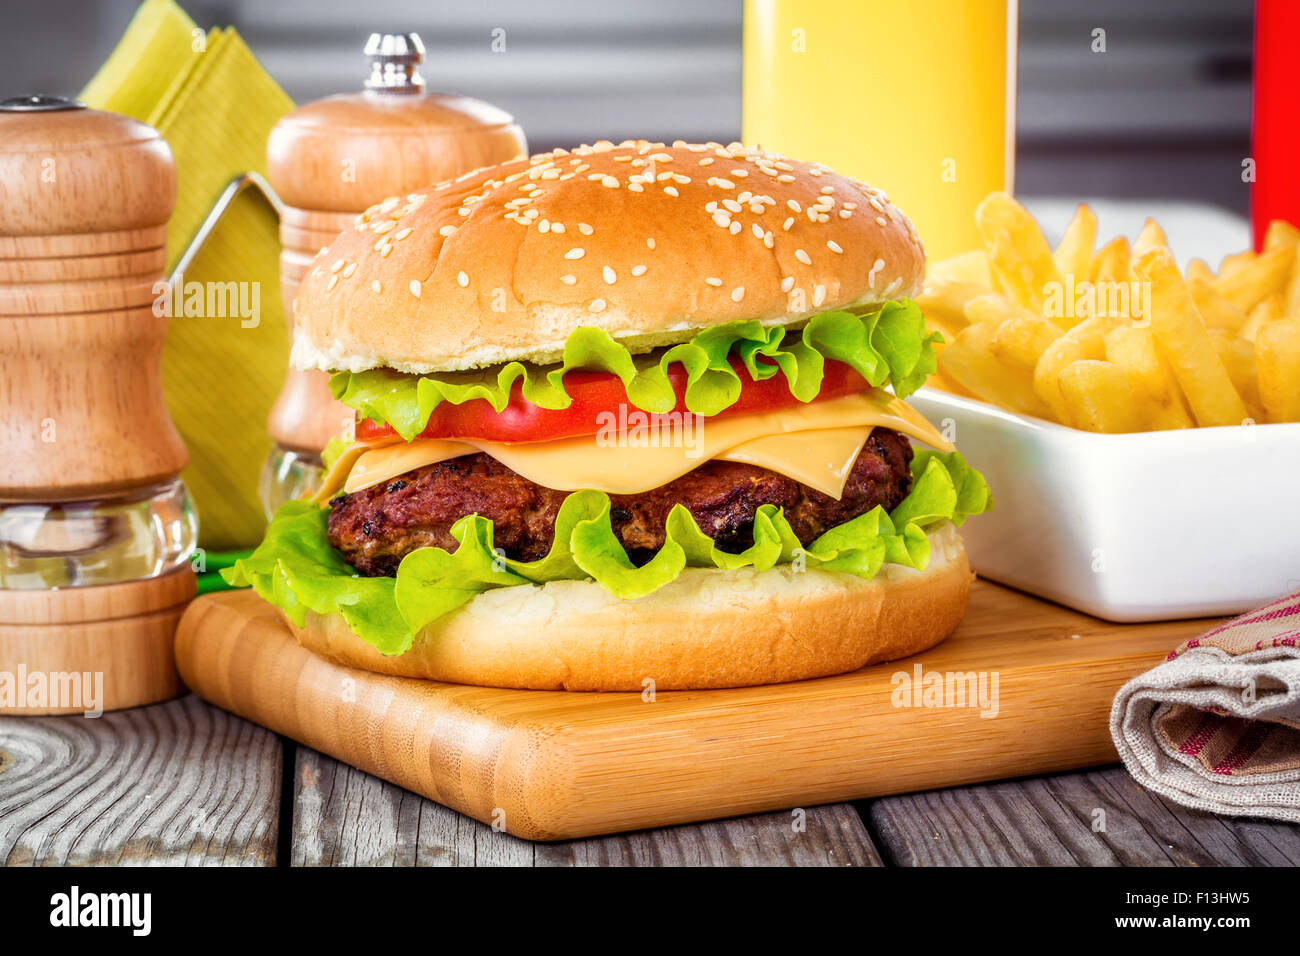 Tasty and appetizing hamburger cheeseburger Stock Photo